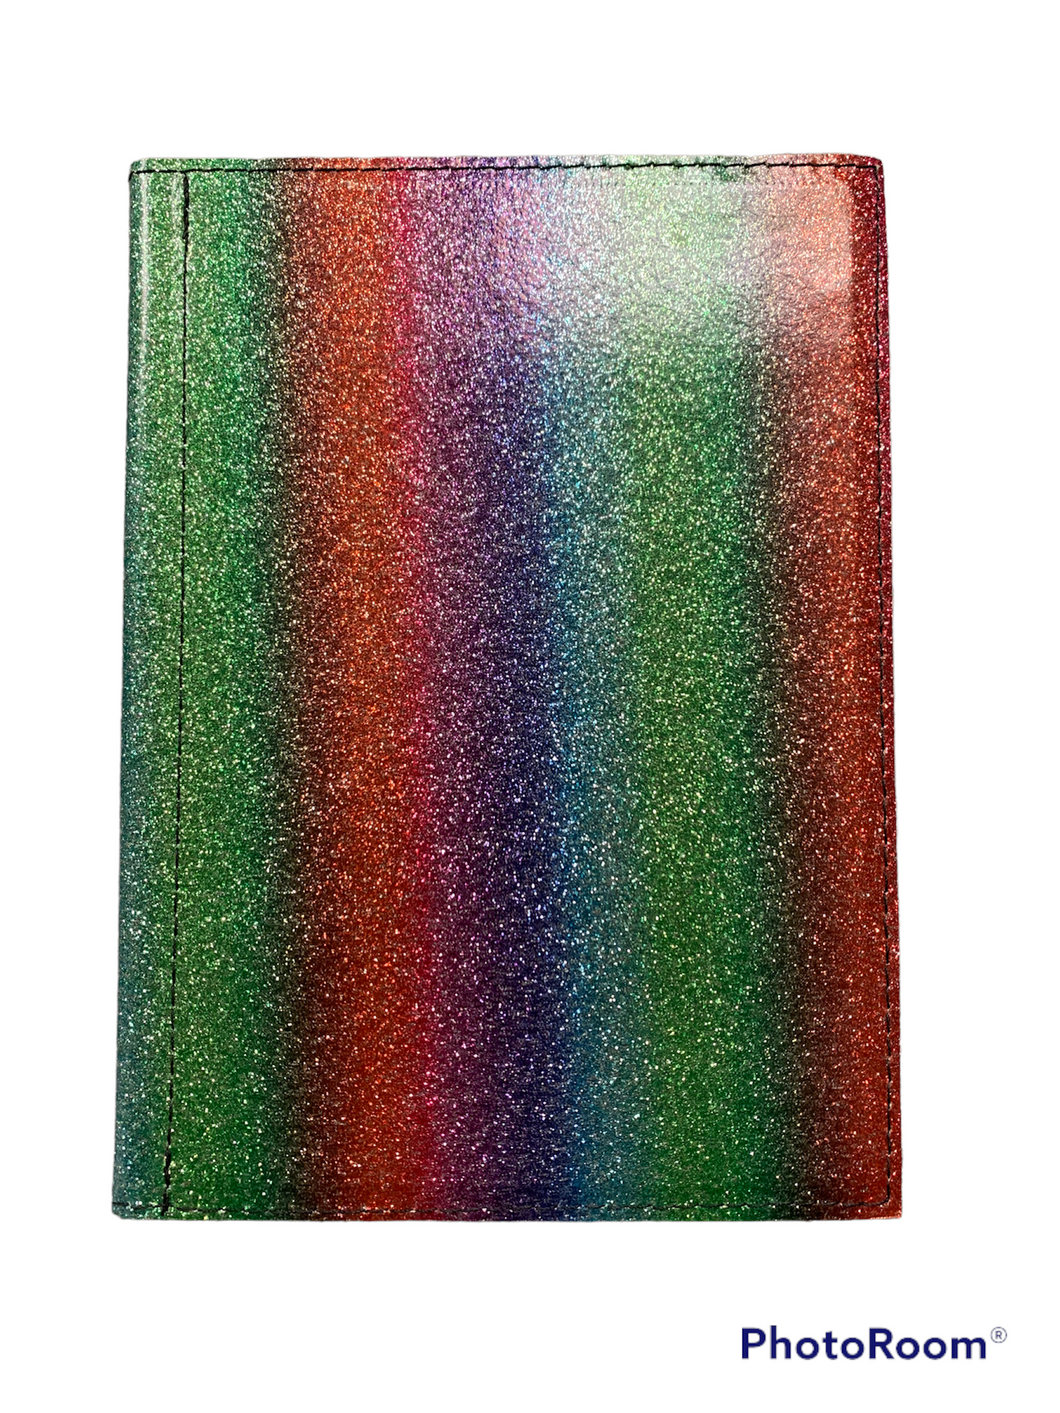 Moondance Notepad Holder - Rainbow Glitter